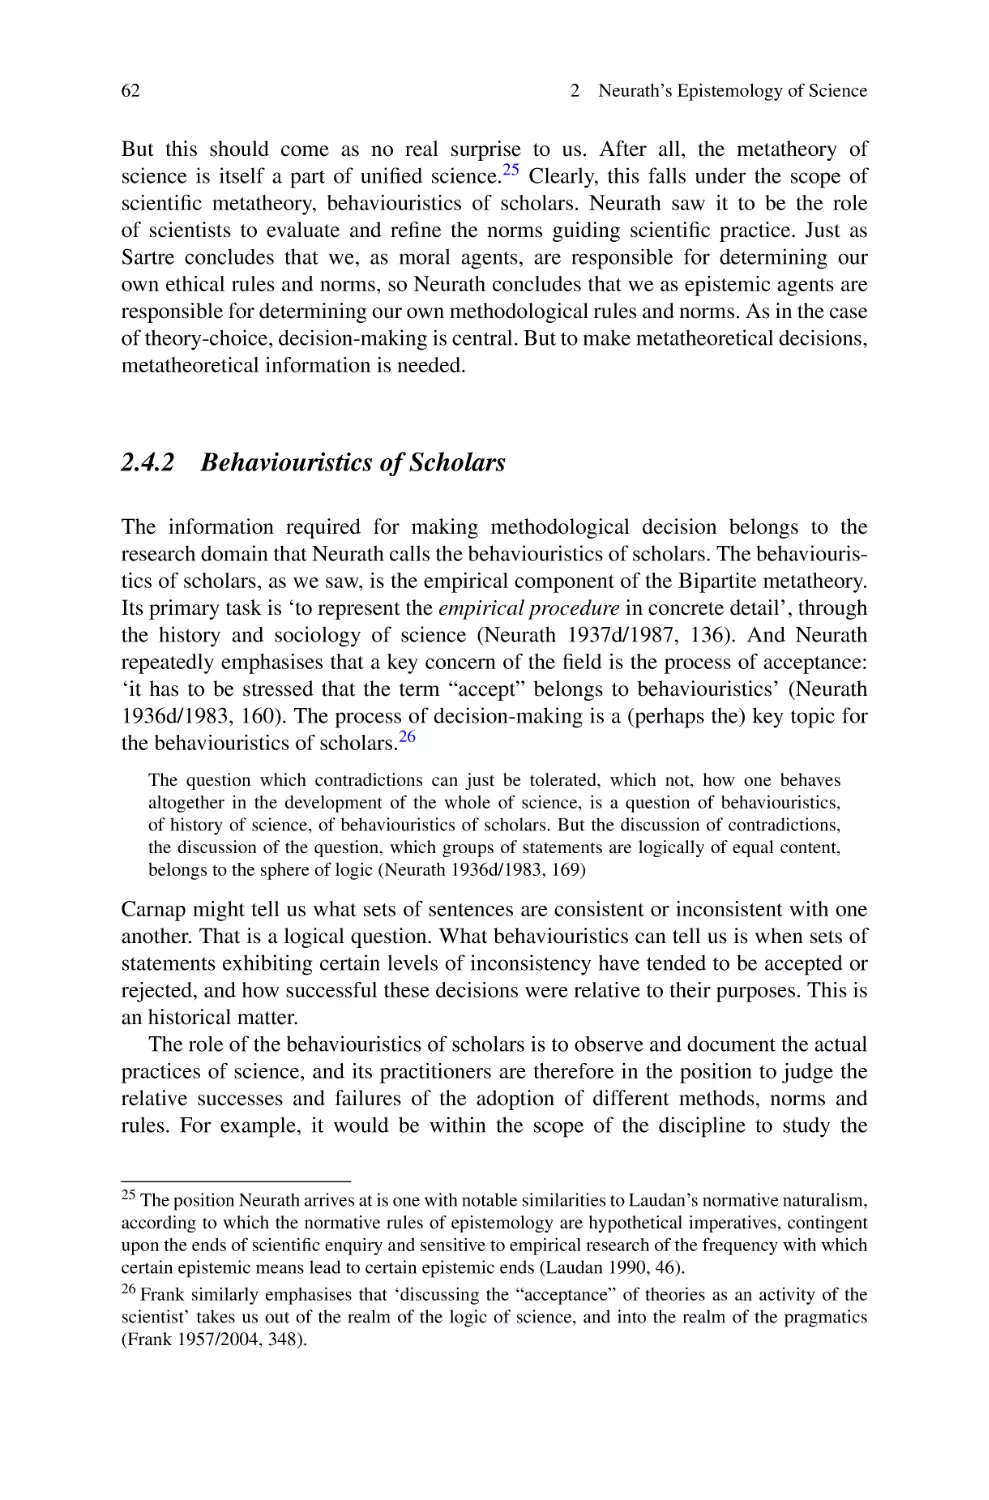 2.4.2 Behaviouristics of Scholars